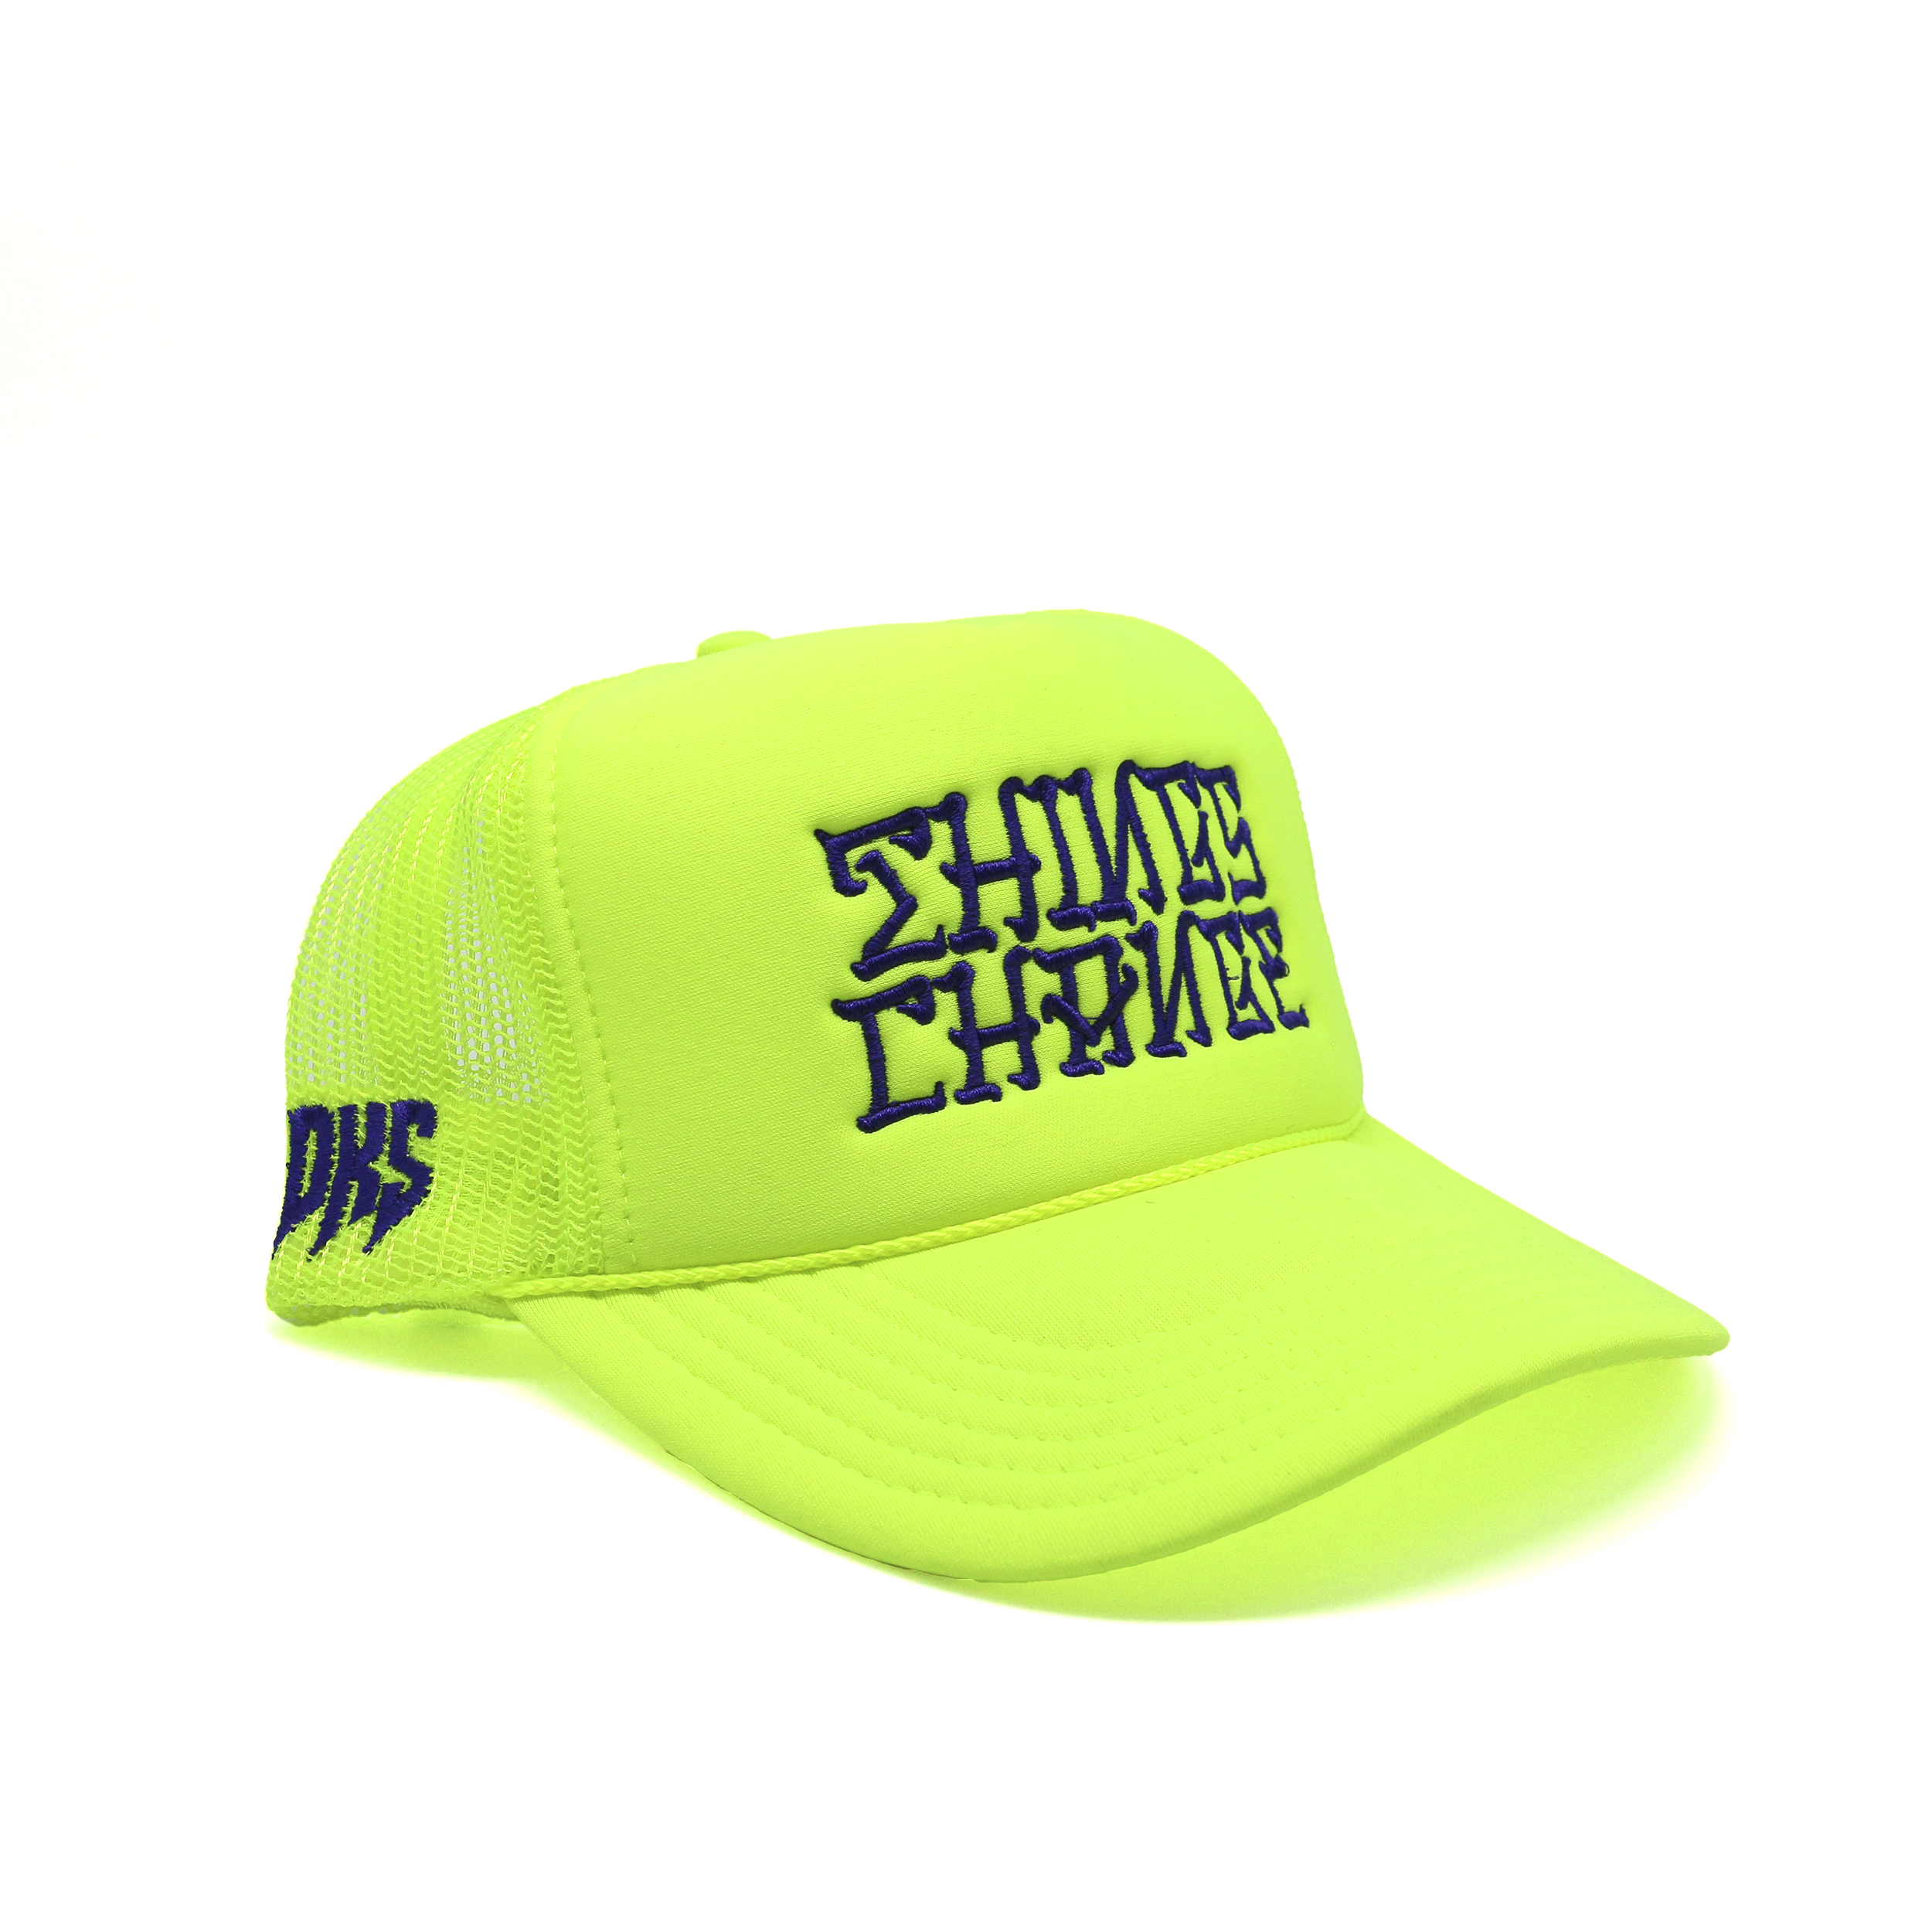 DKS "Things Change" Trucker Hat (Yellow/Purple)